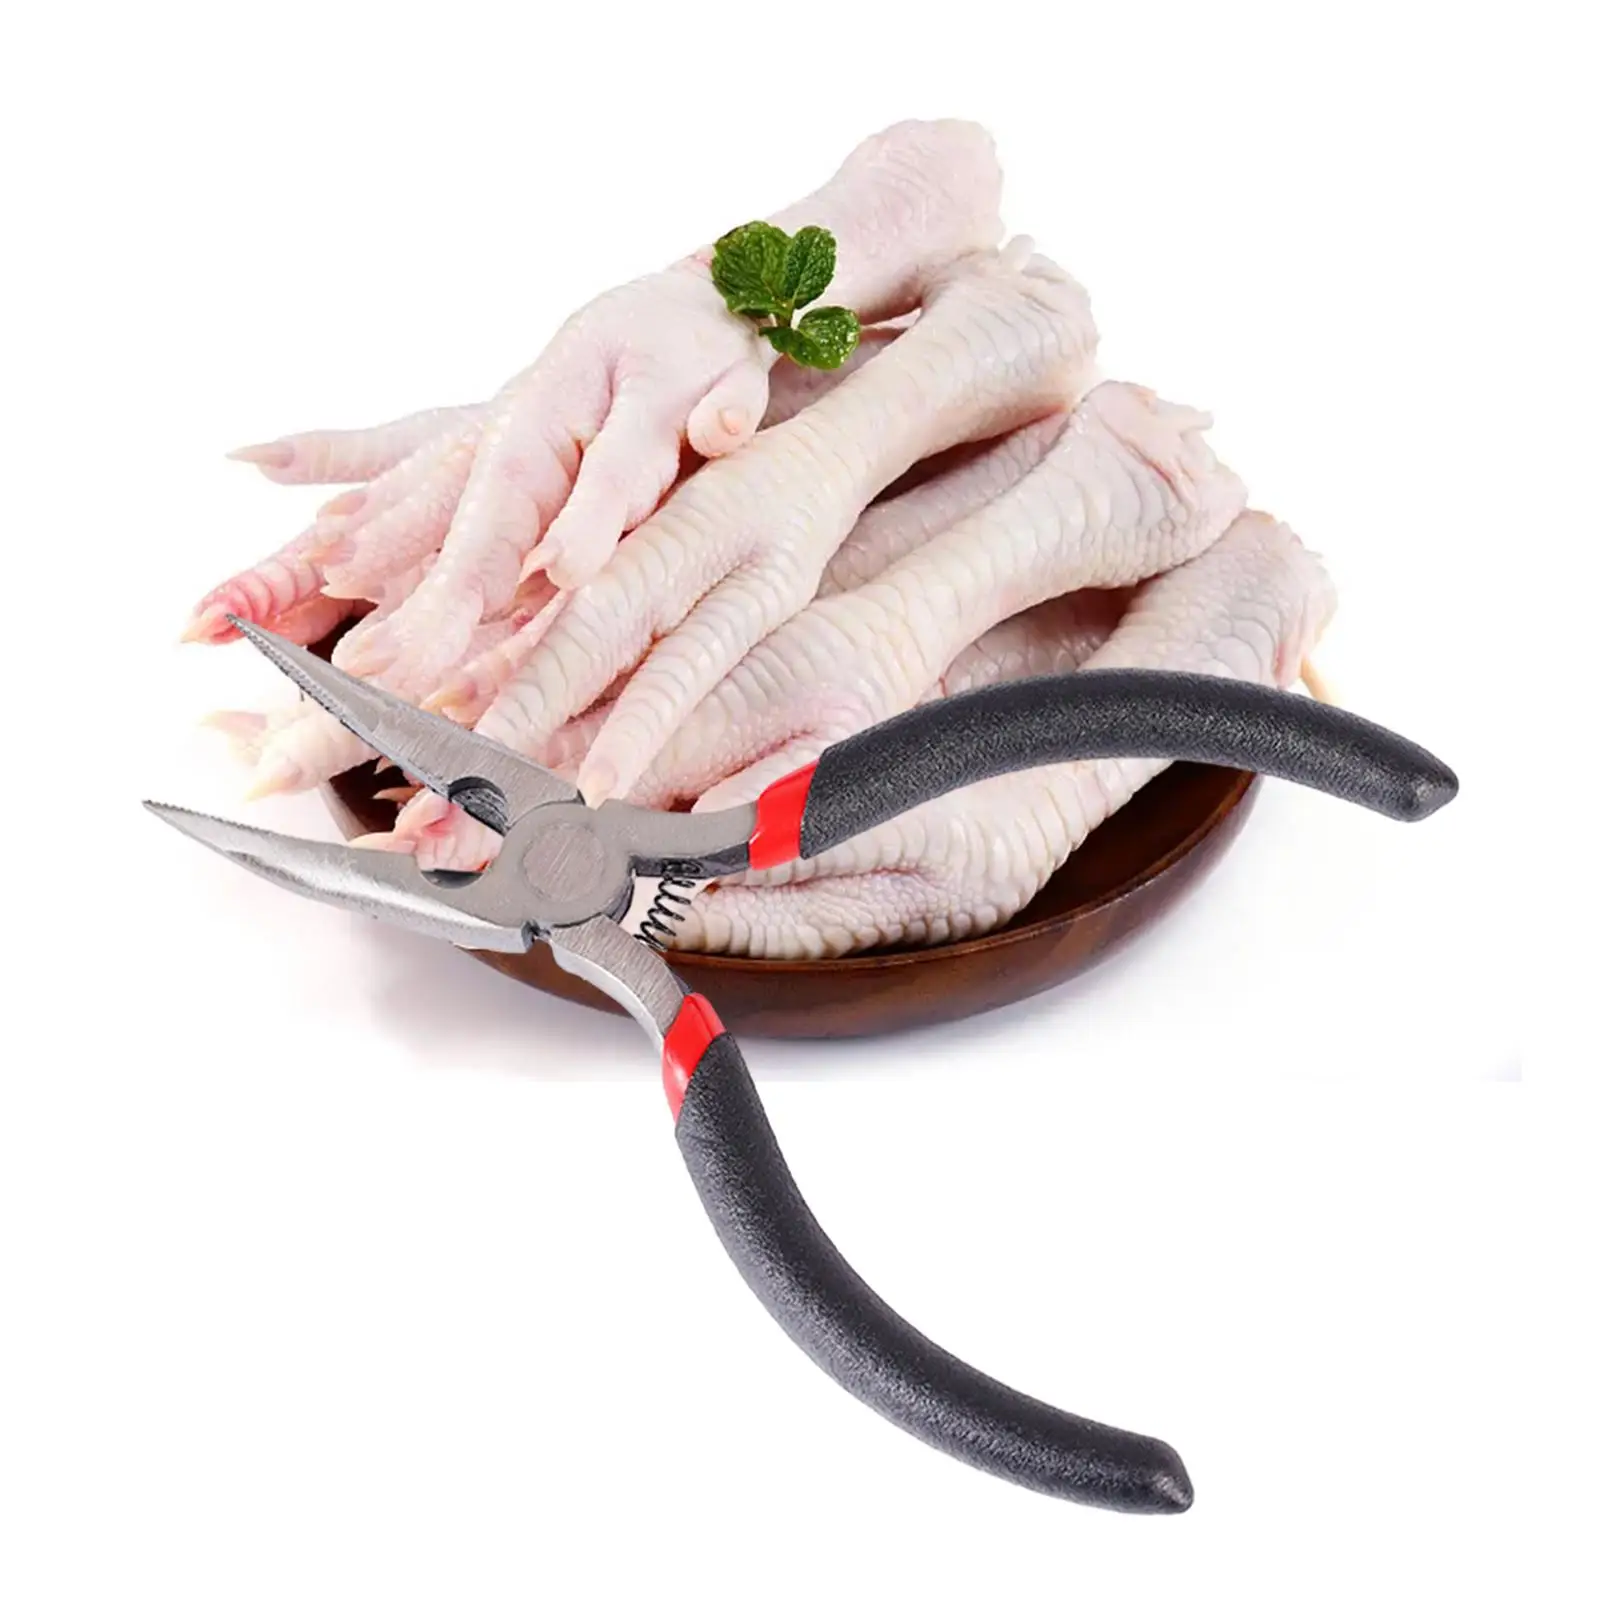 Poultry Scissors Chicken Meat Cutting Rustproof Kitchen Scissors